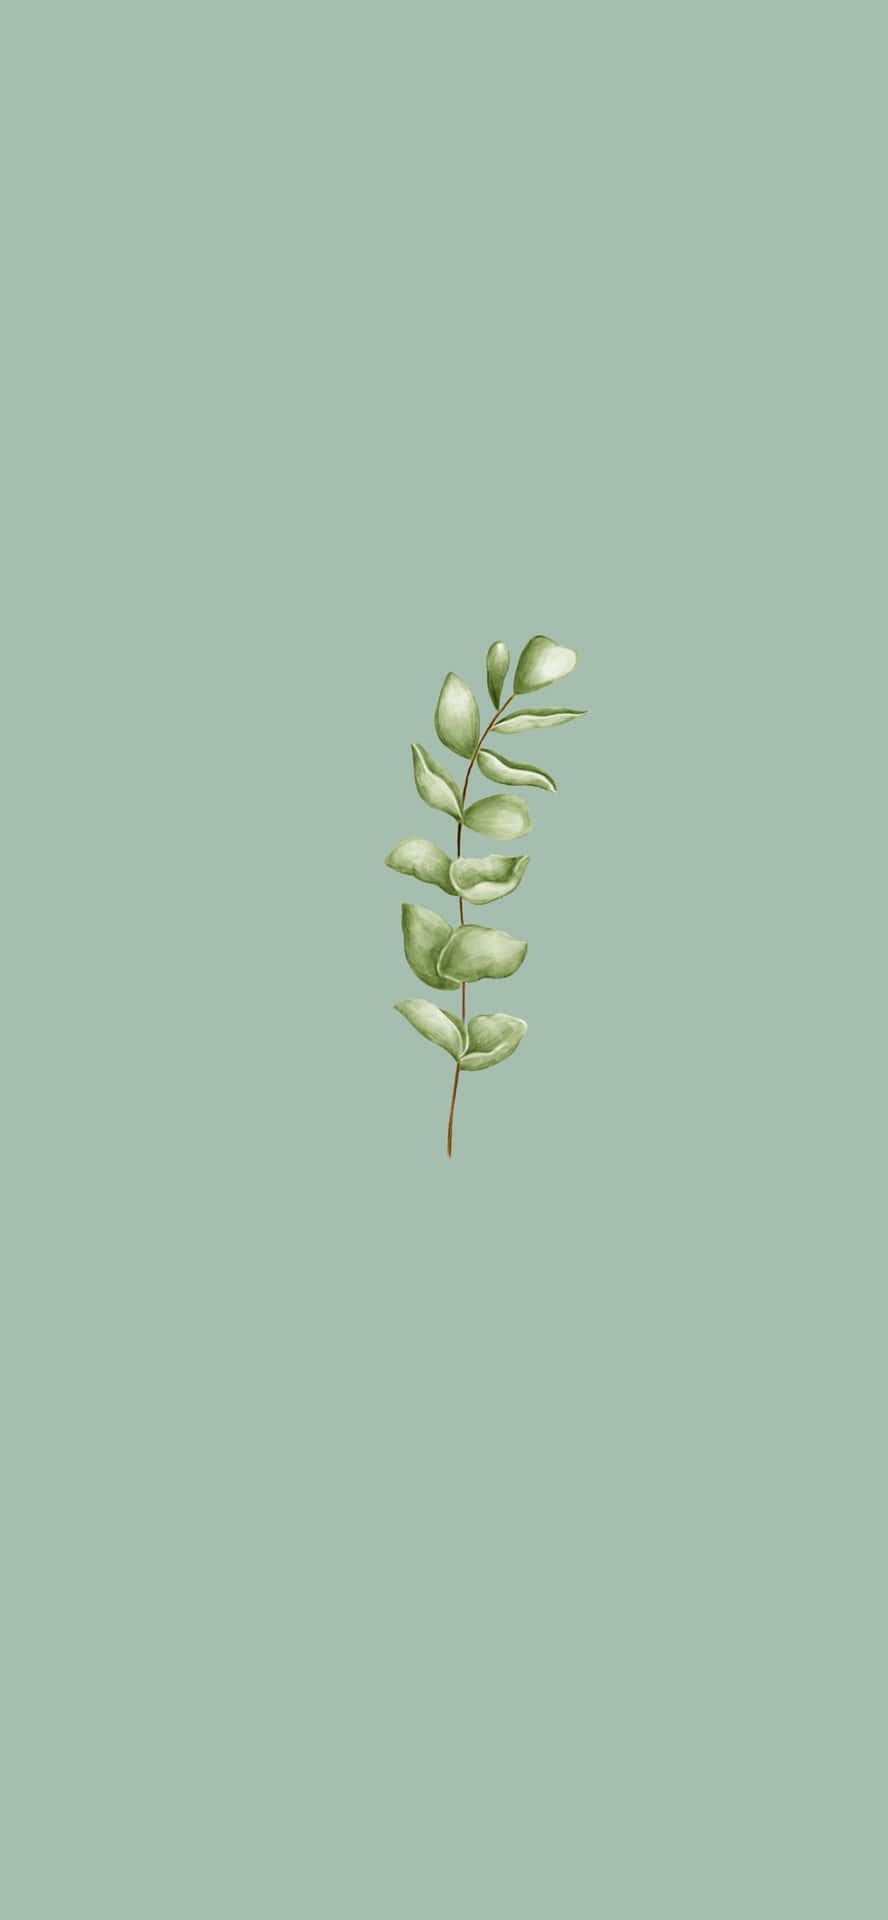 Green Leaf Sprig Simple Background.jpg Wallpaper